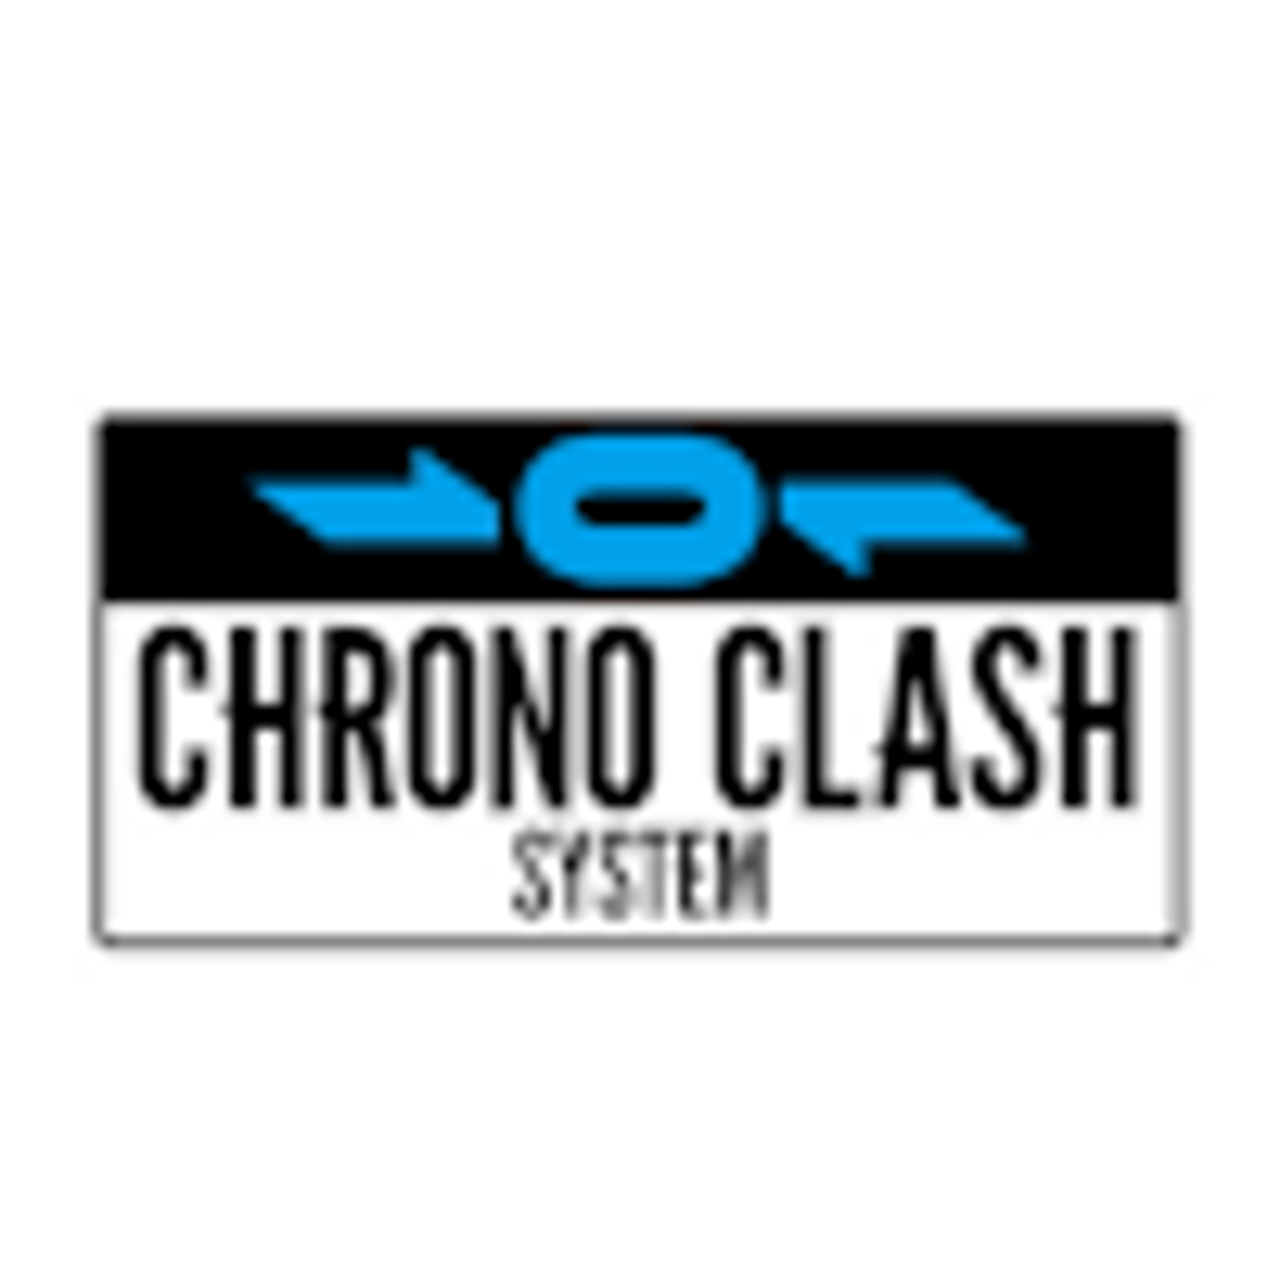 Chrono Clash System Sealed Products